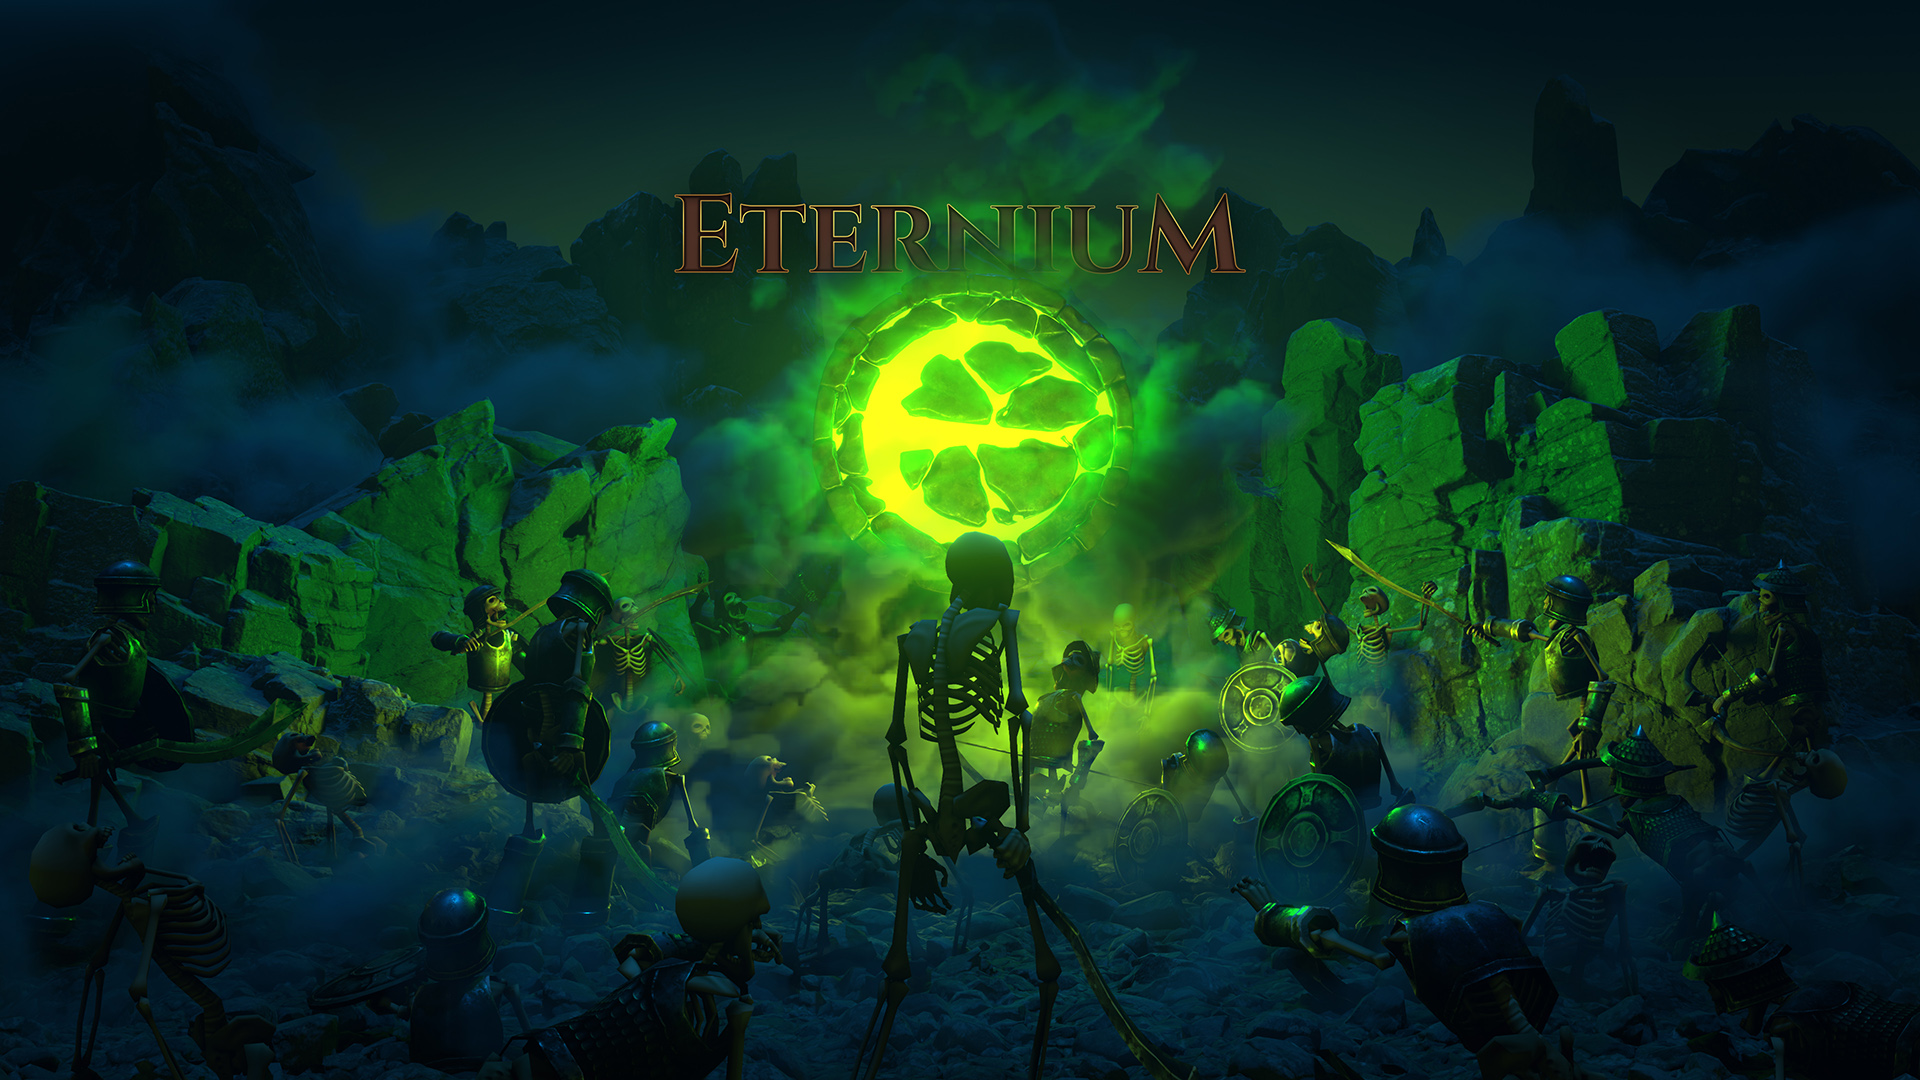 Eternum game. Eternium форум секретный код. Texored.